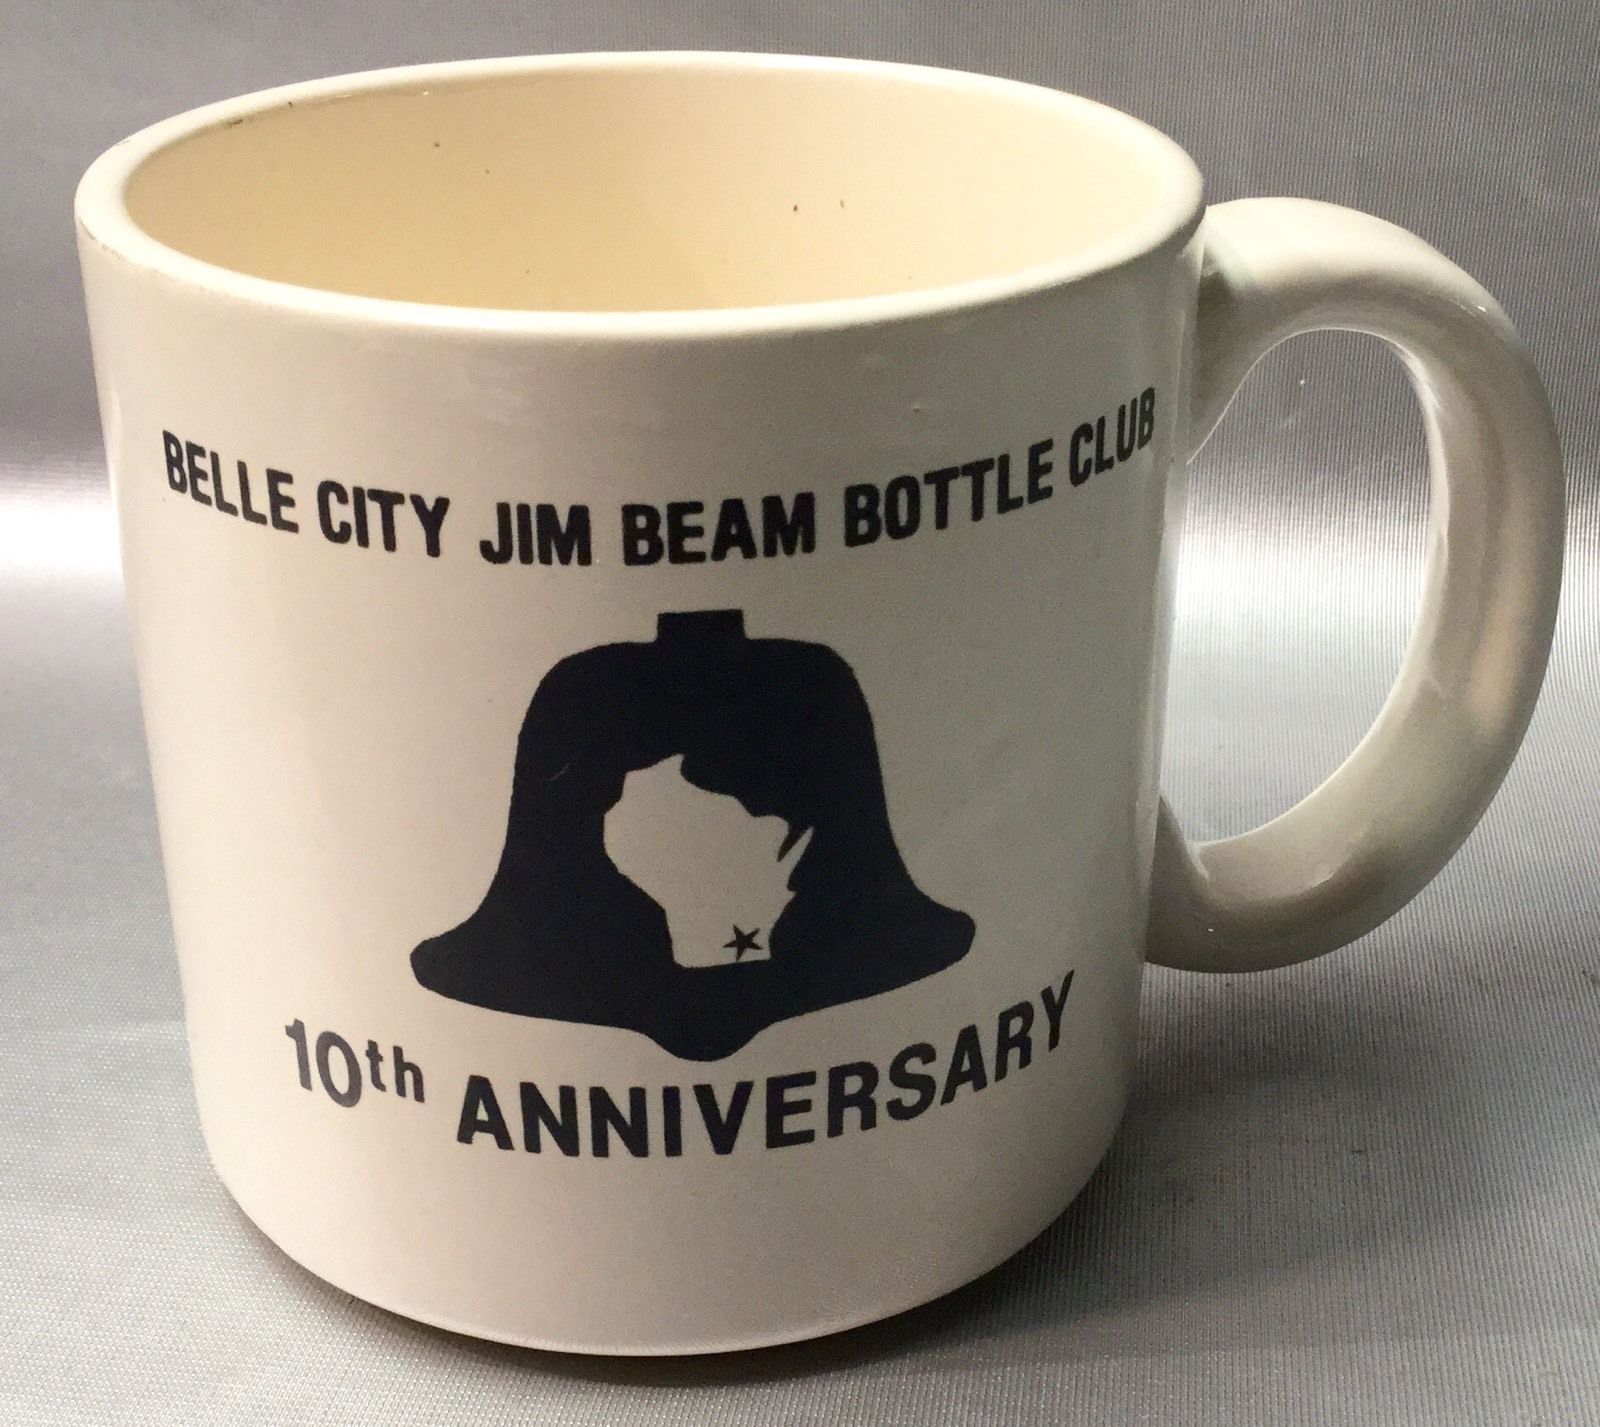 Jim Beam Bottle Club BELLE CITY, WI 10th Anniversary Vintage 1987 Coffee Mug - $7.51